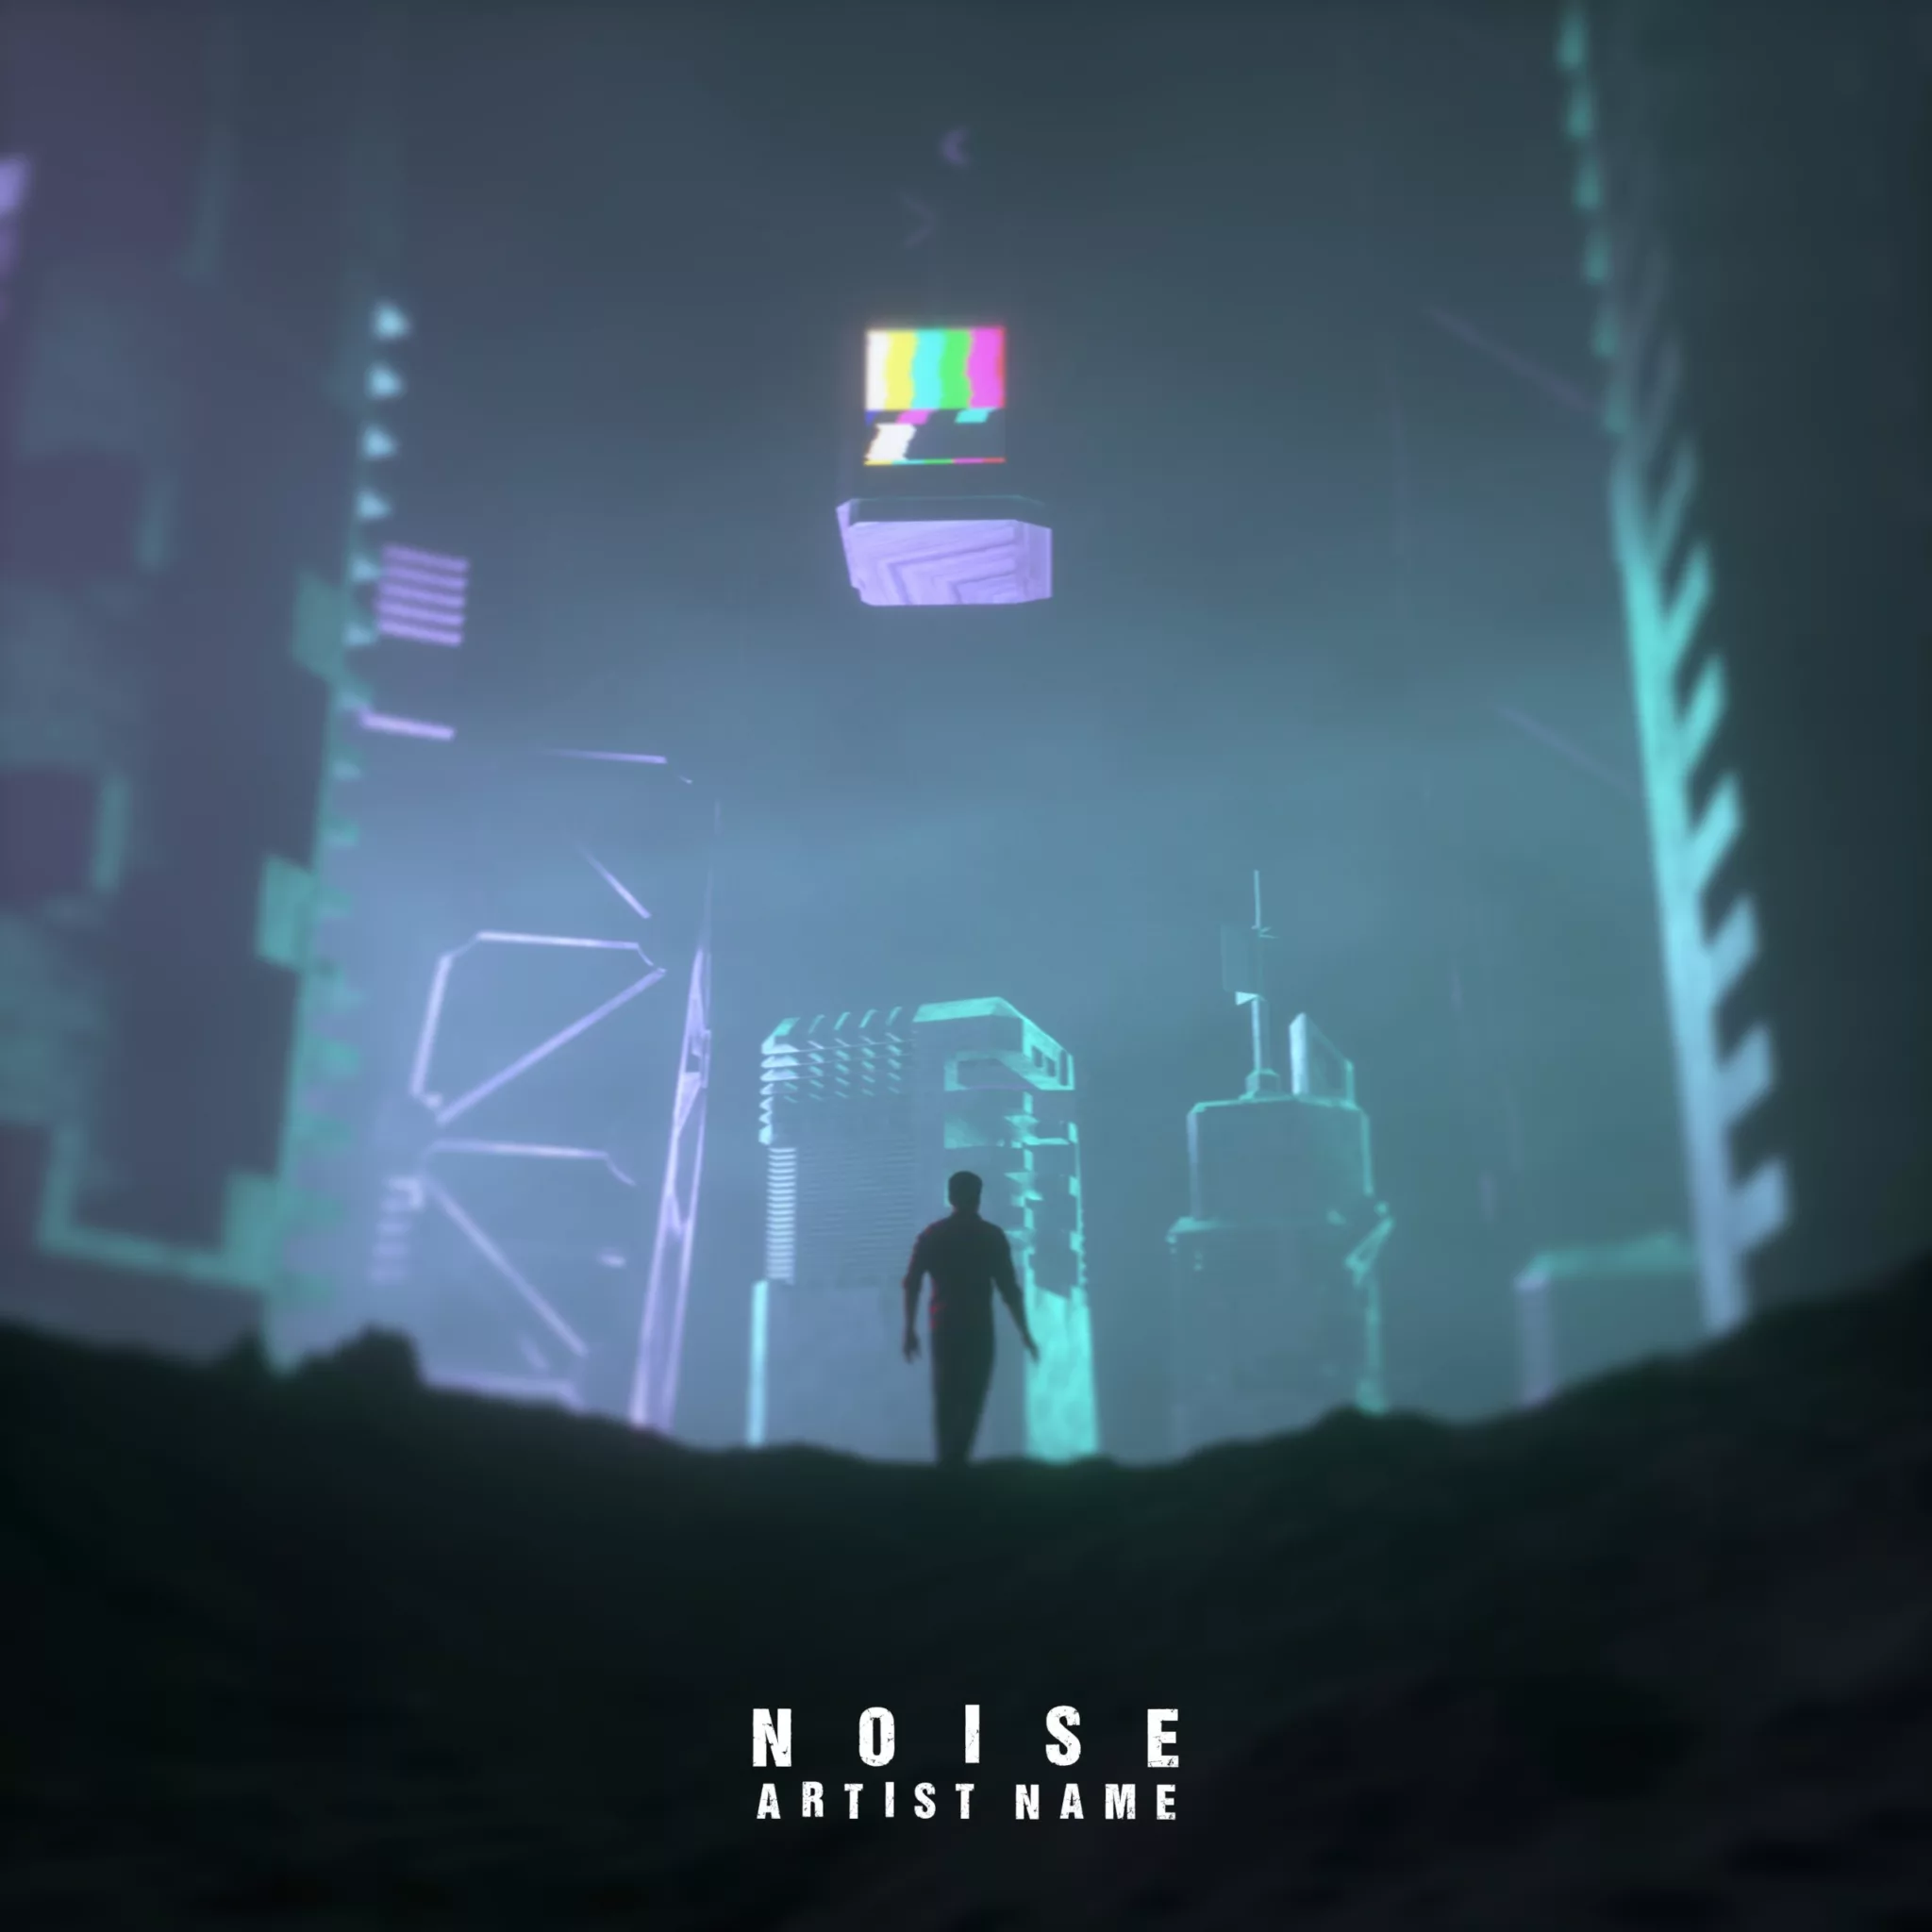 the noise album artwork